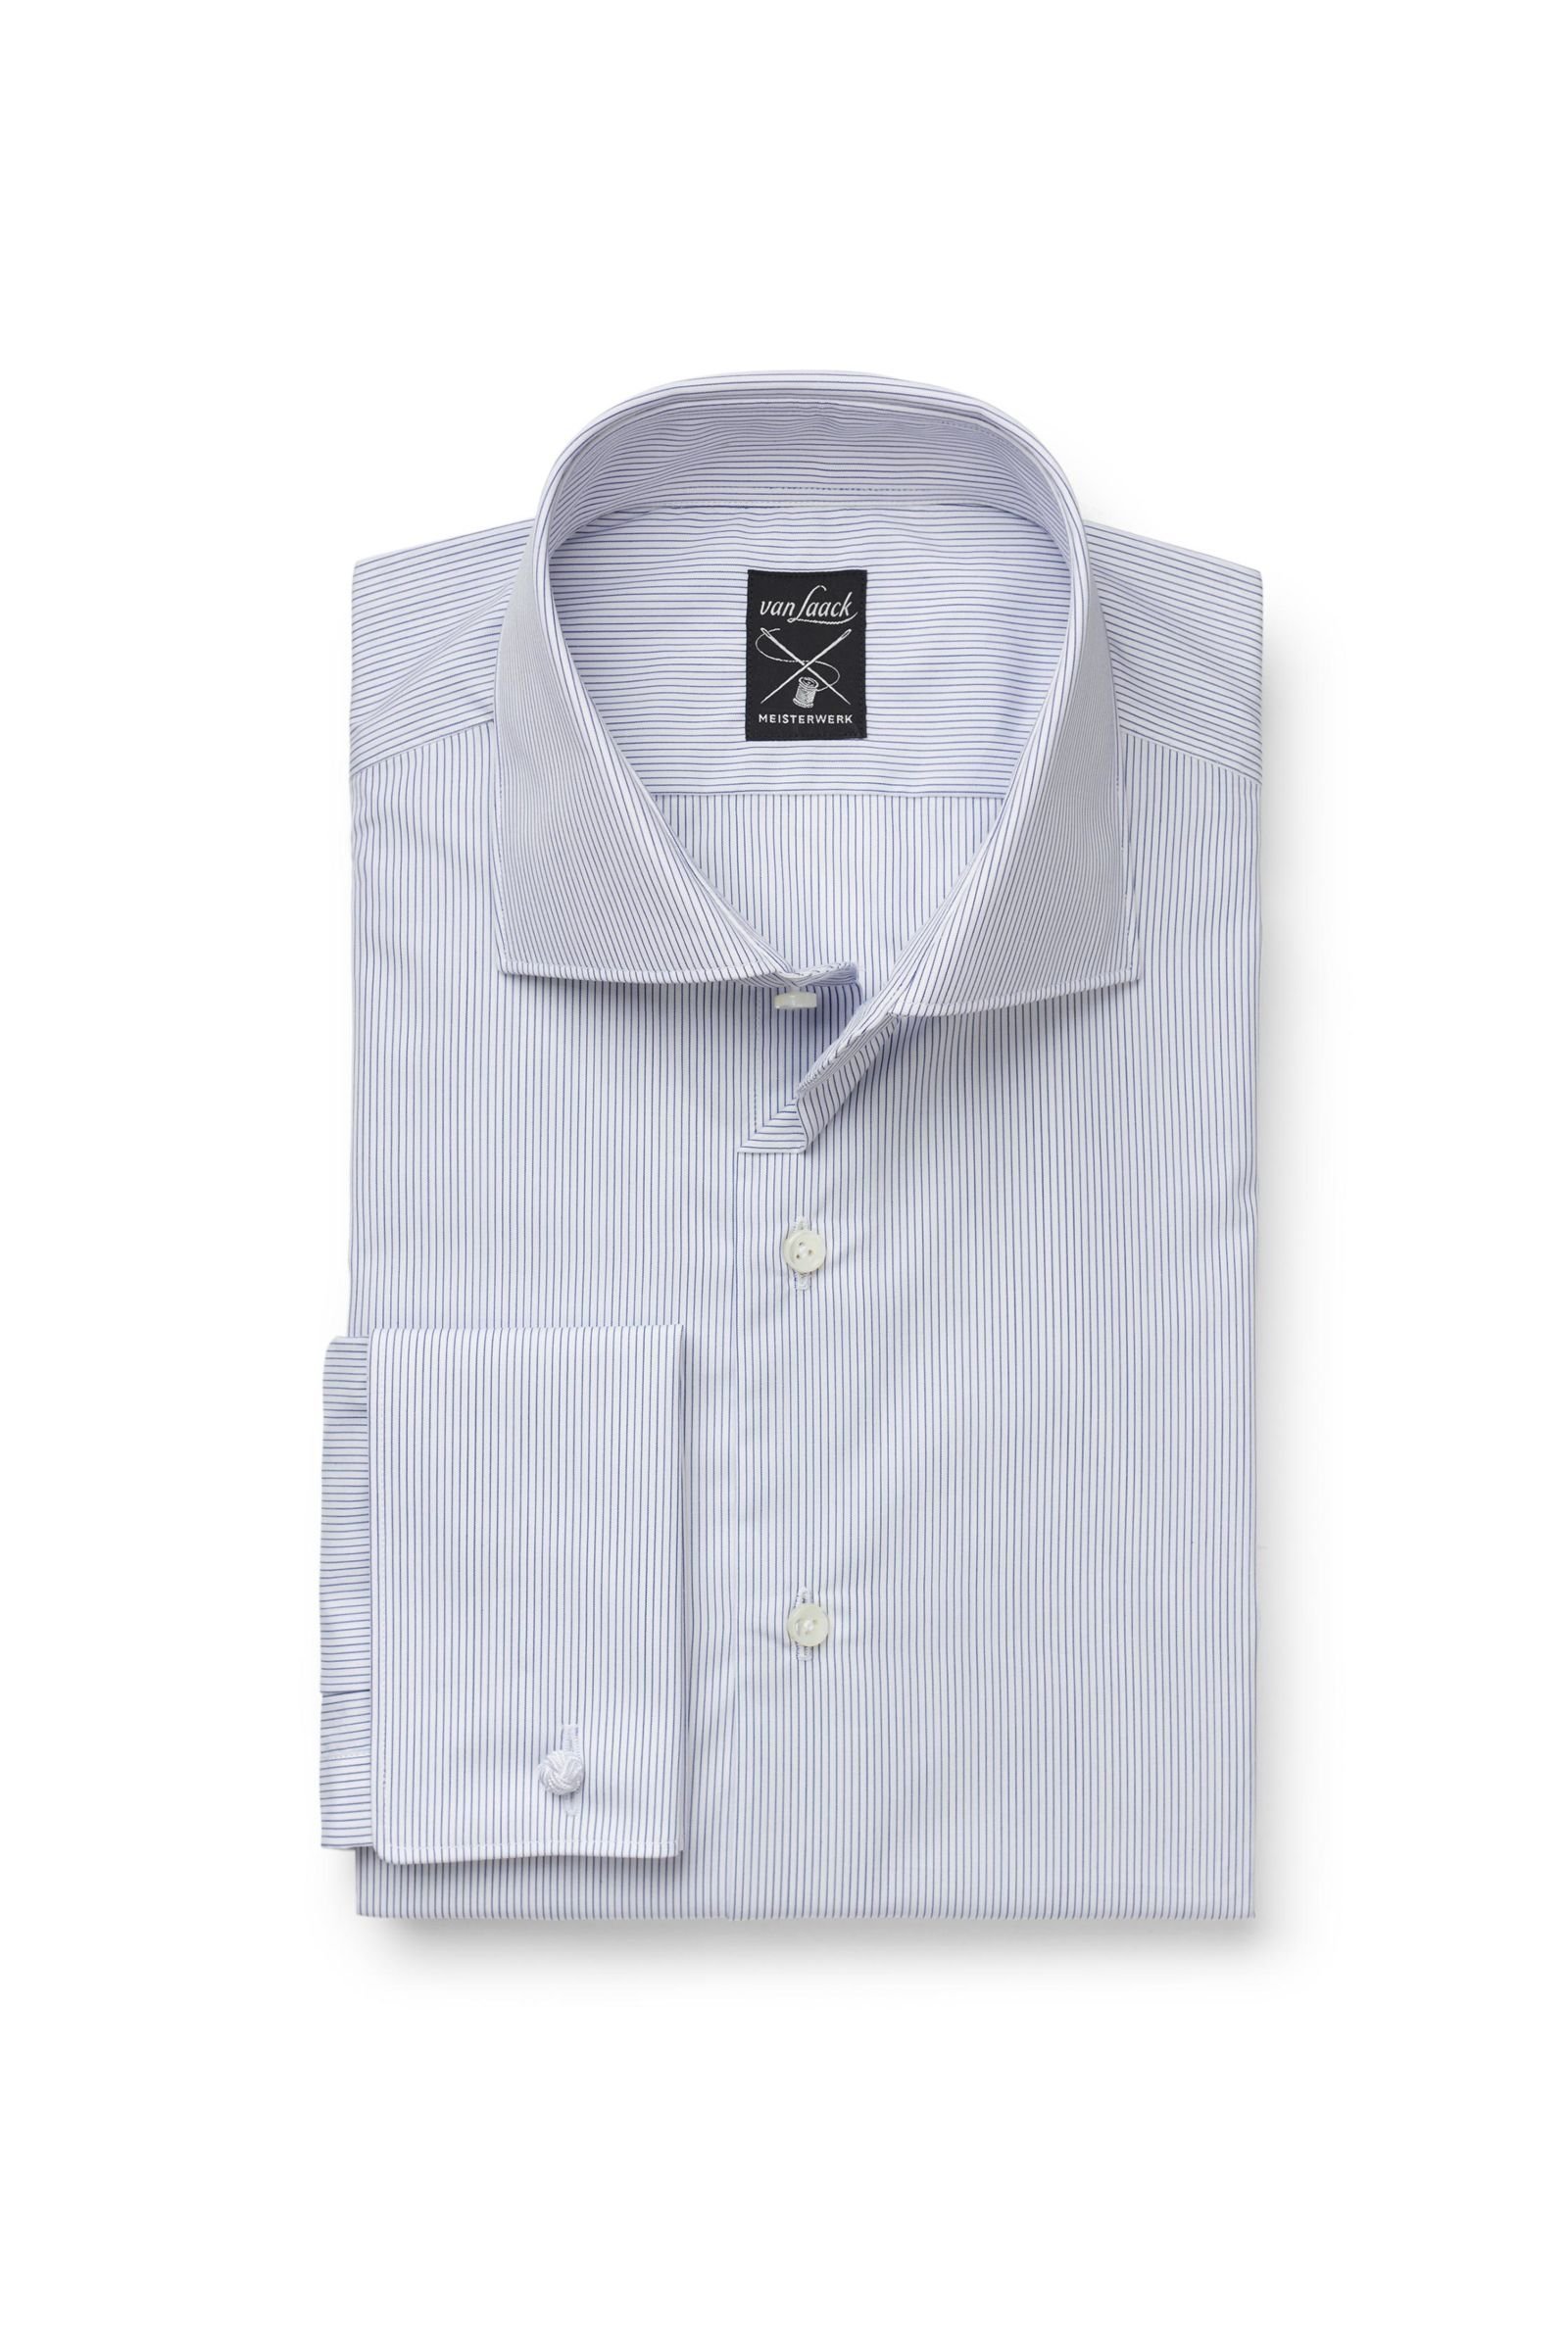 Business shirt 'Mivara Tailor Fit' shark collar white/navy striped